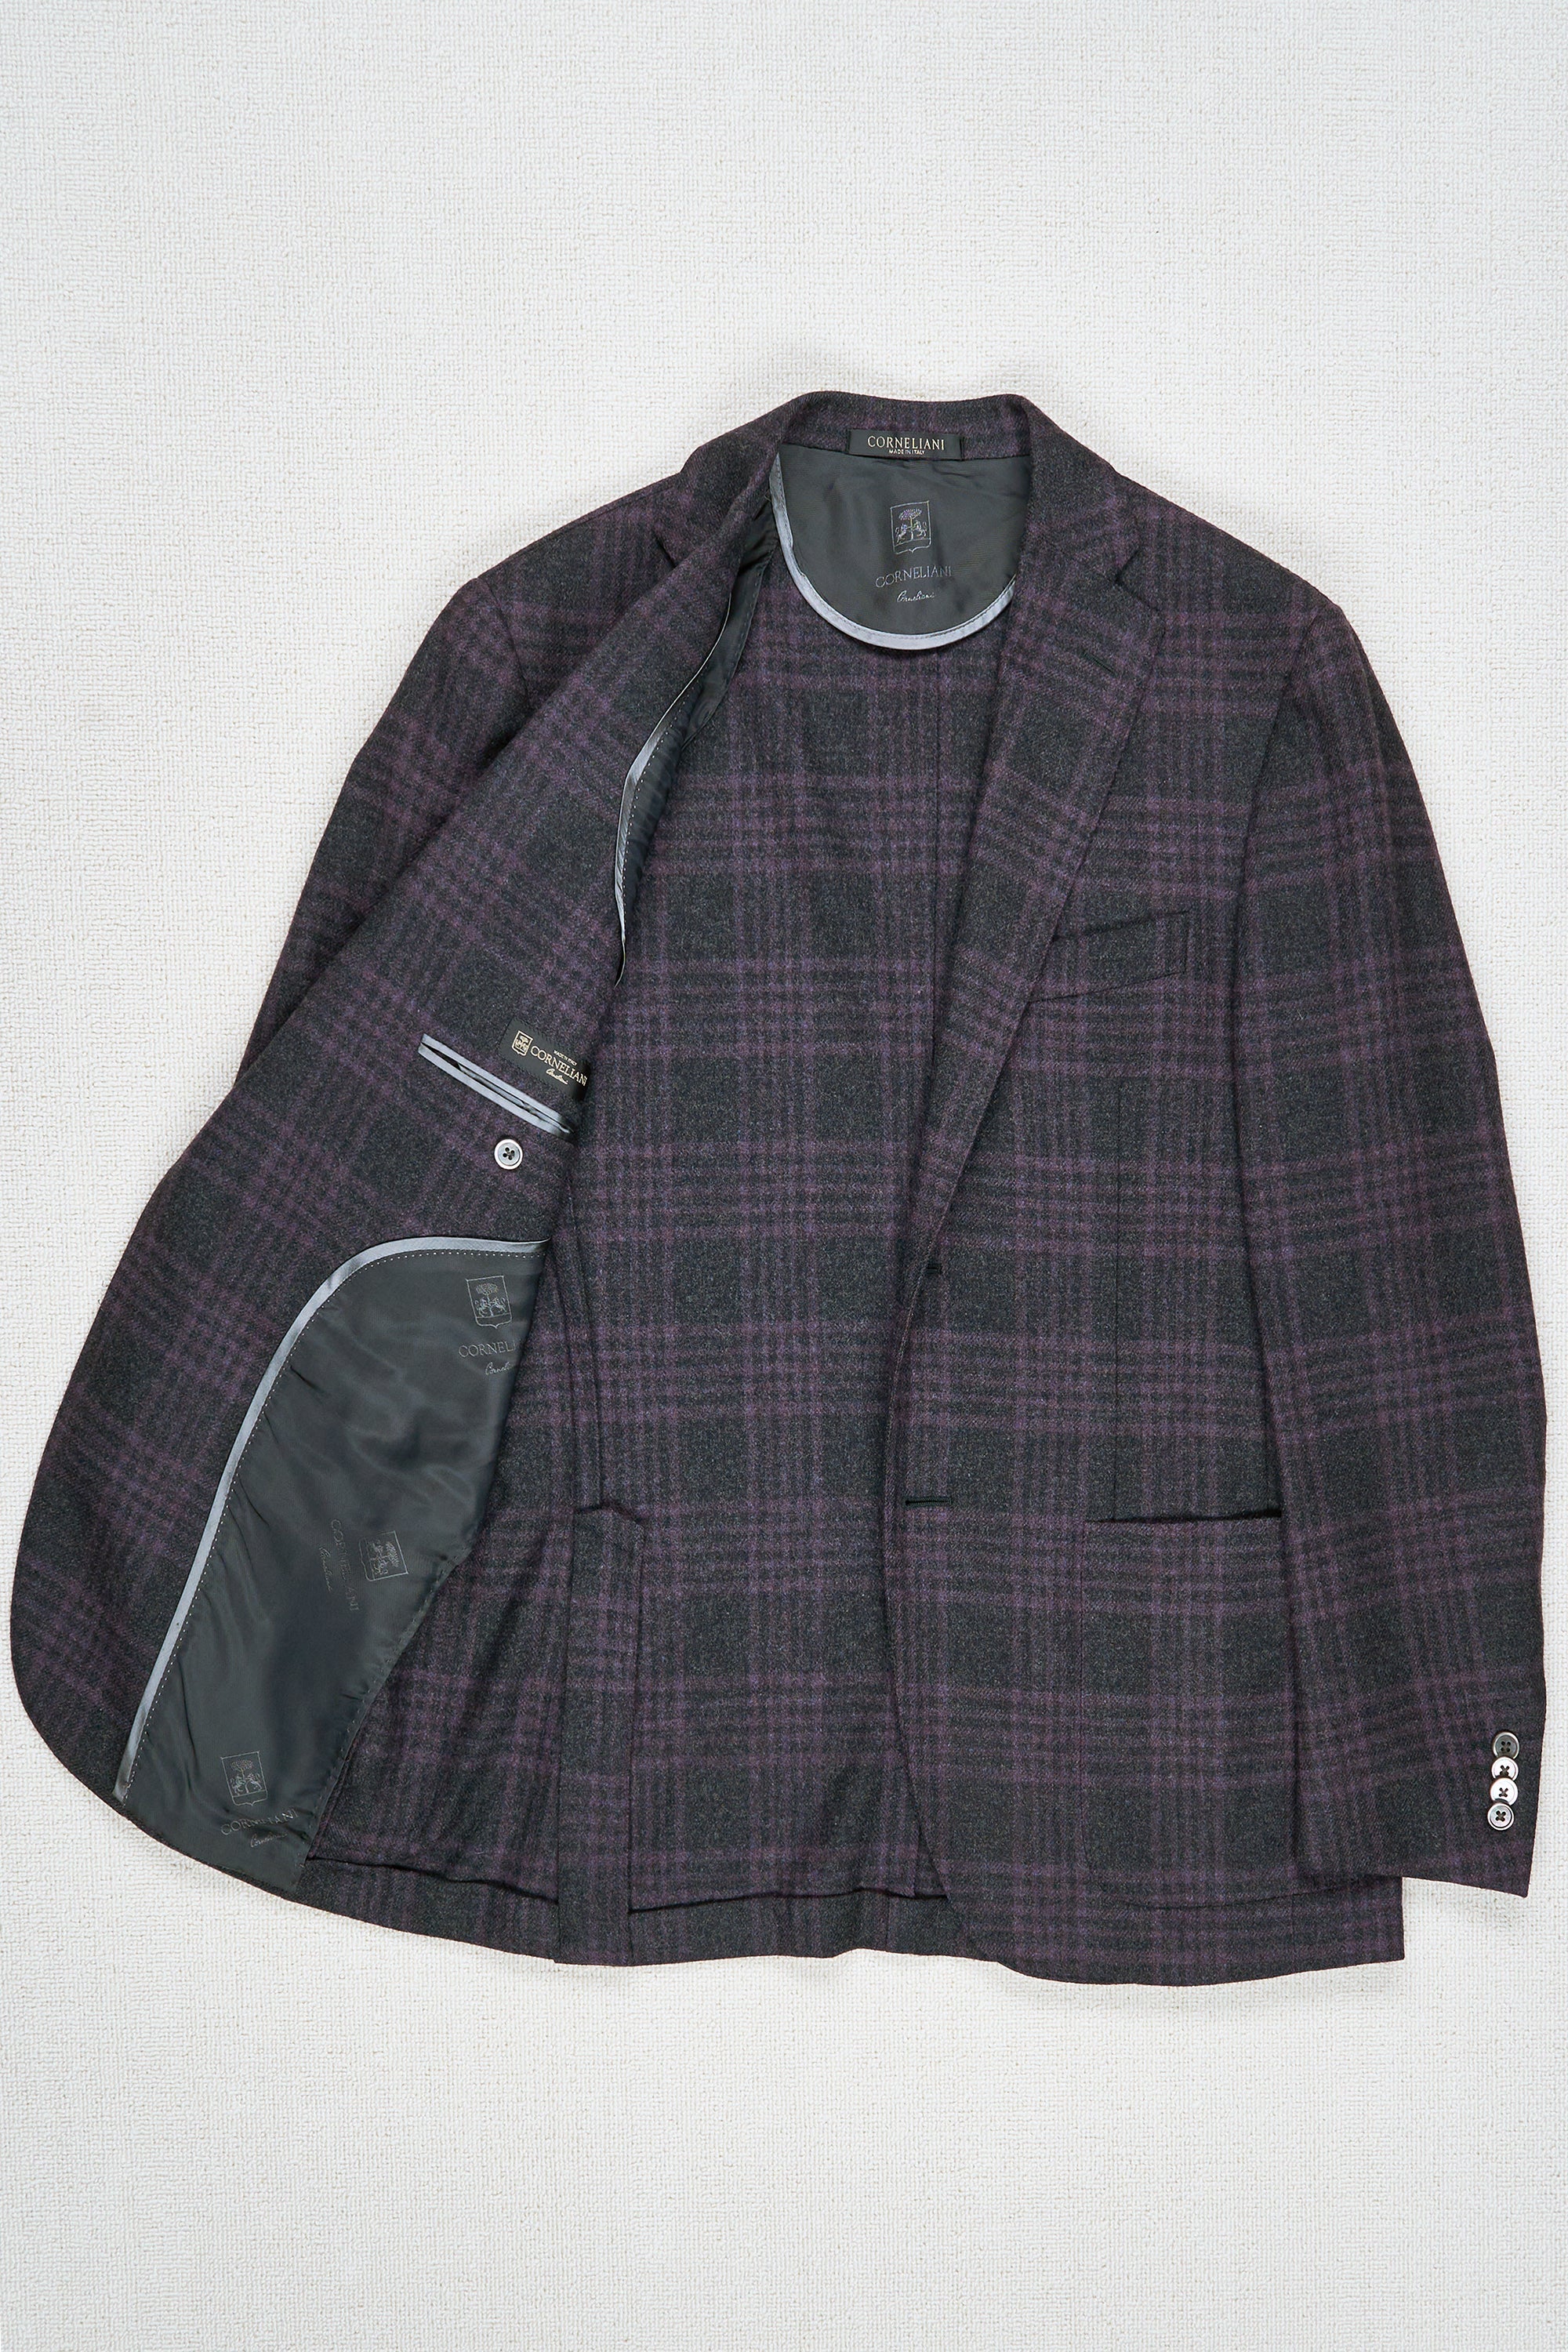 Corneliani Dark Grey with Purple Check Wool/Cashmere Sport Coat